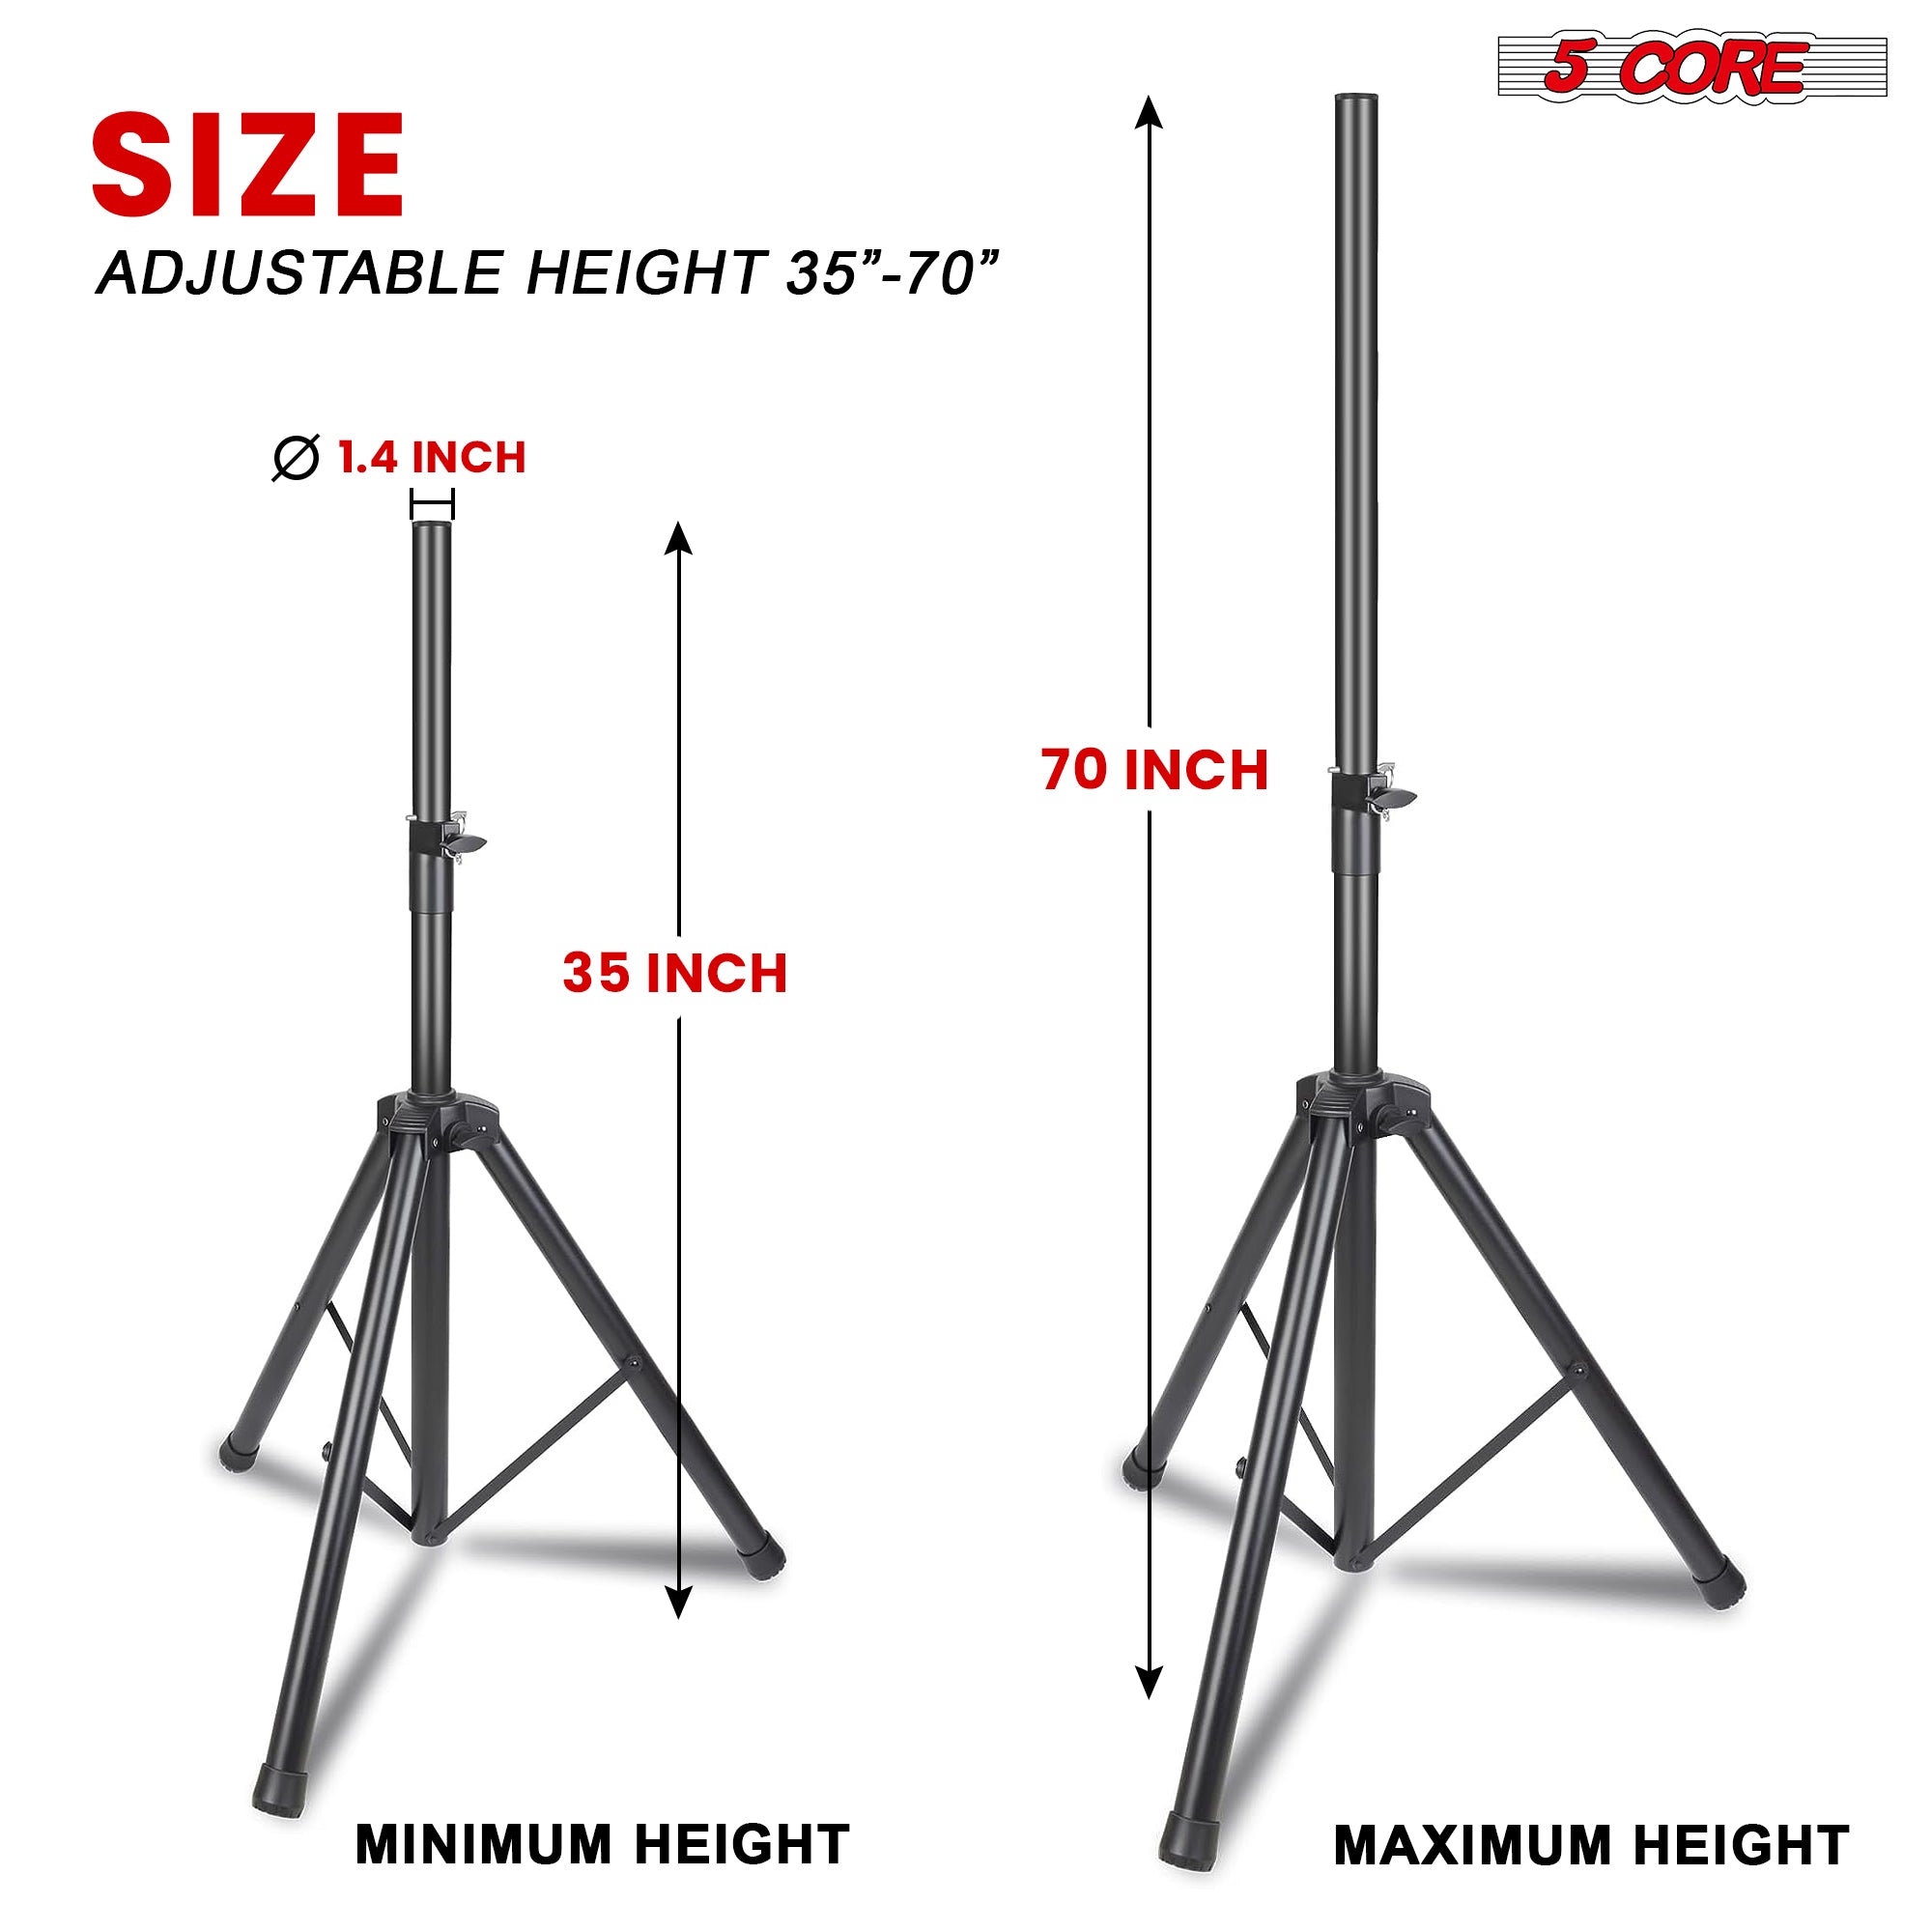 5 Core Height Adjustable Heavy Duty Speaker Stand